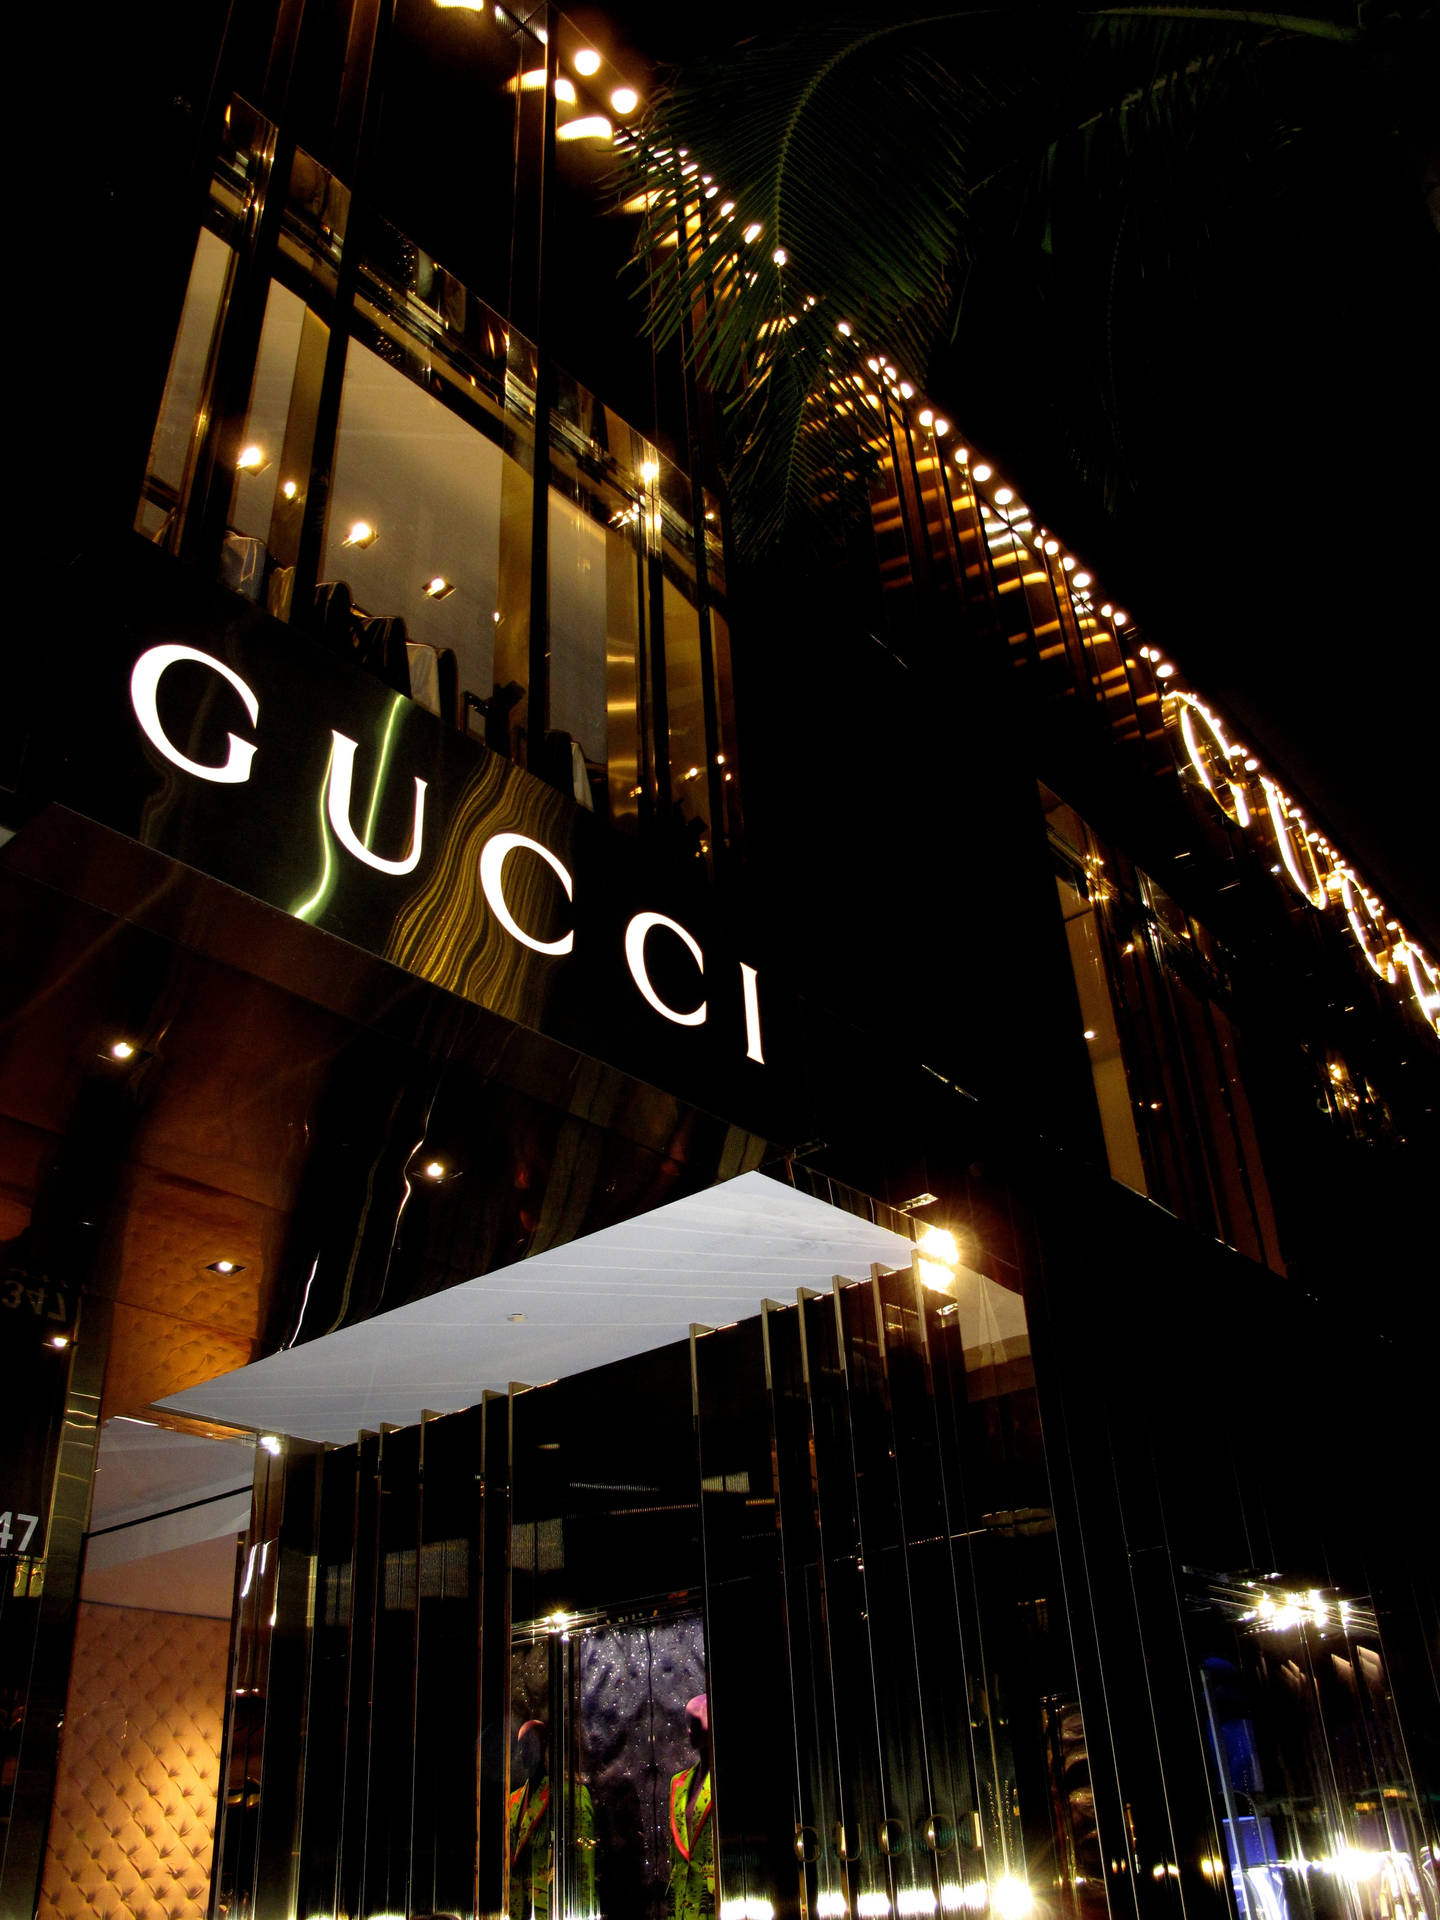 Gucci Storefrontat Night.jpg Wallpaper